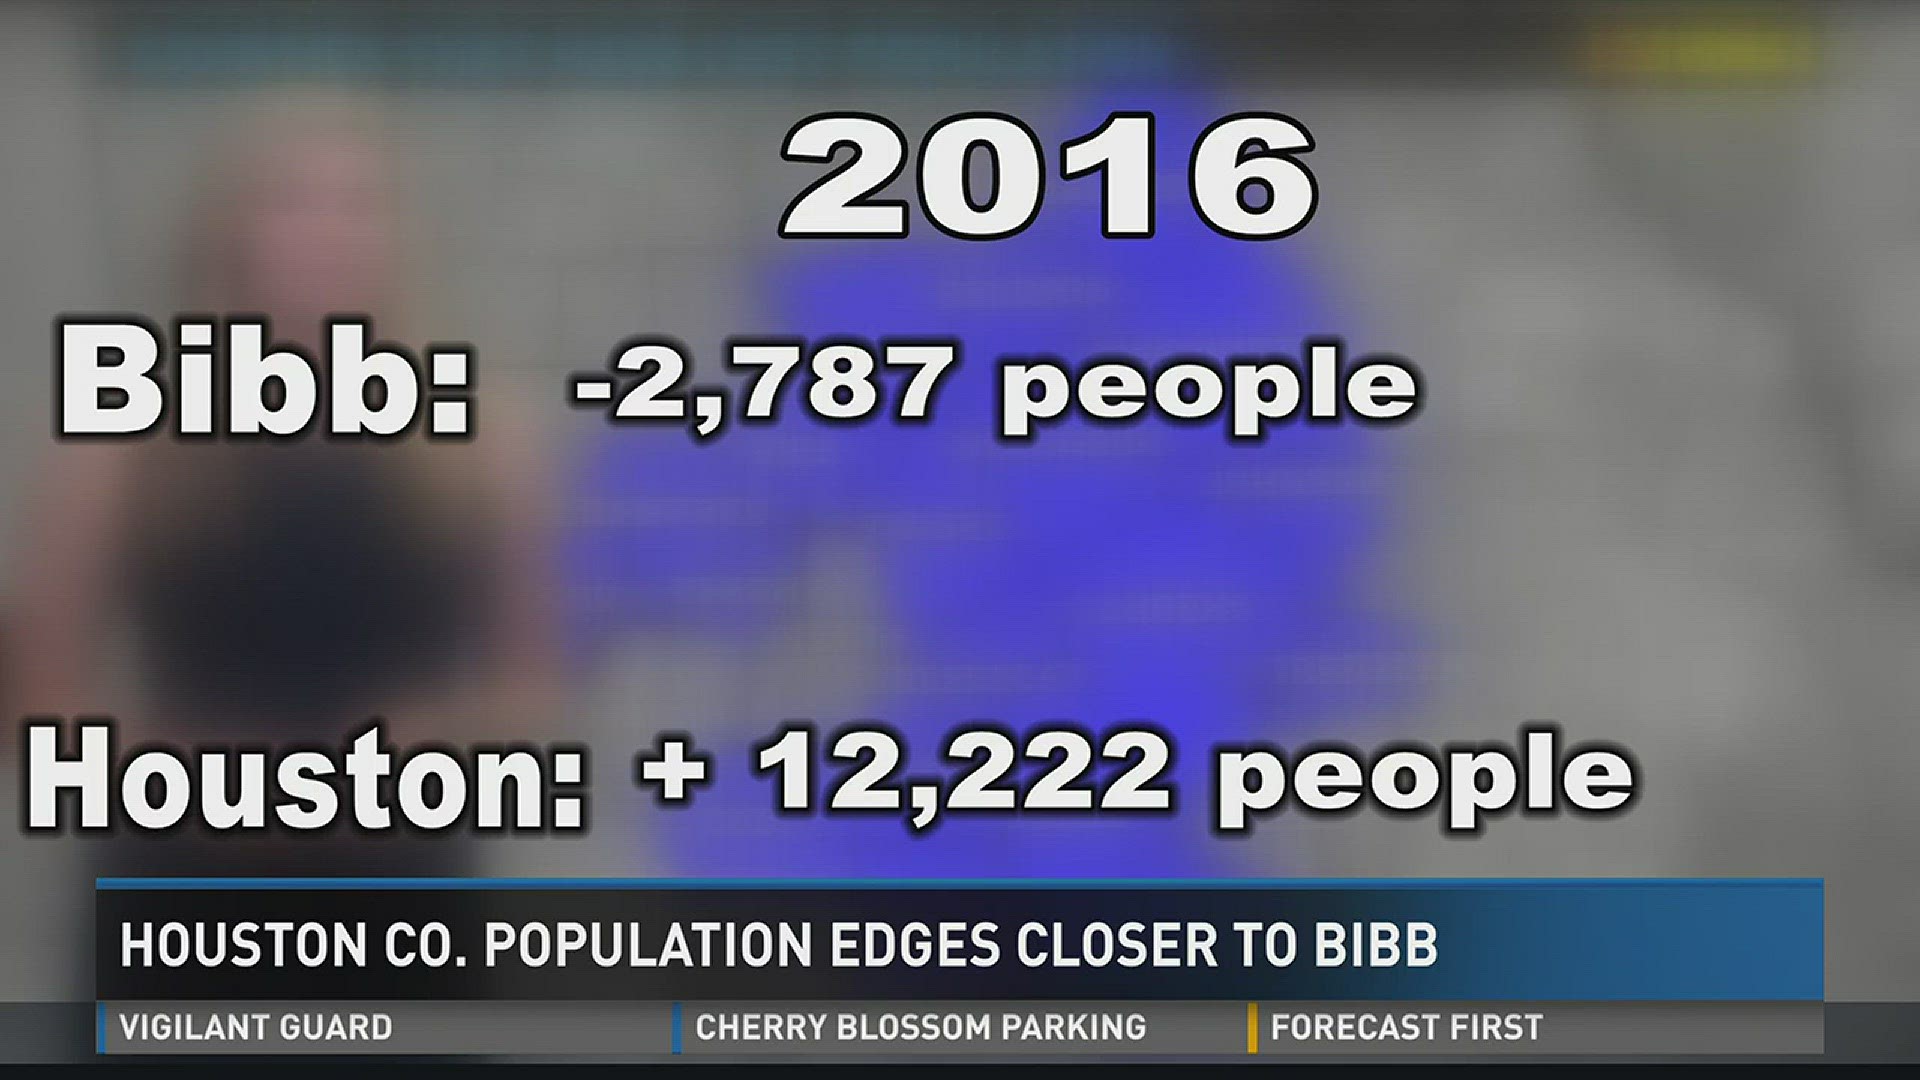 Houston Co. population growing closer to Bibb